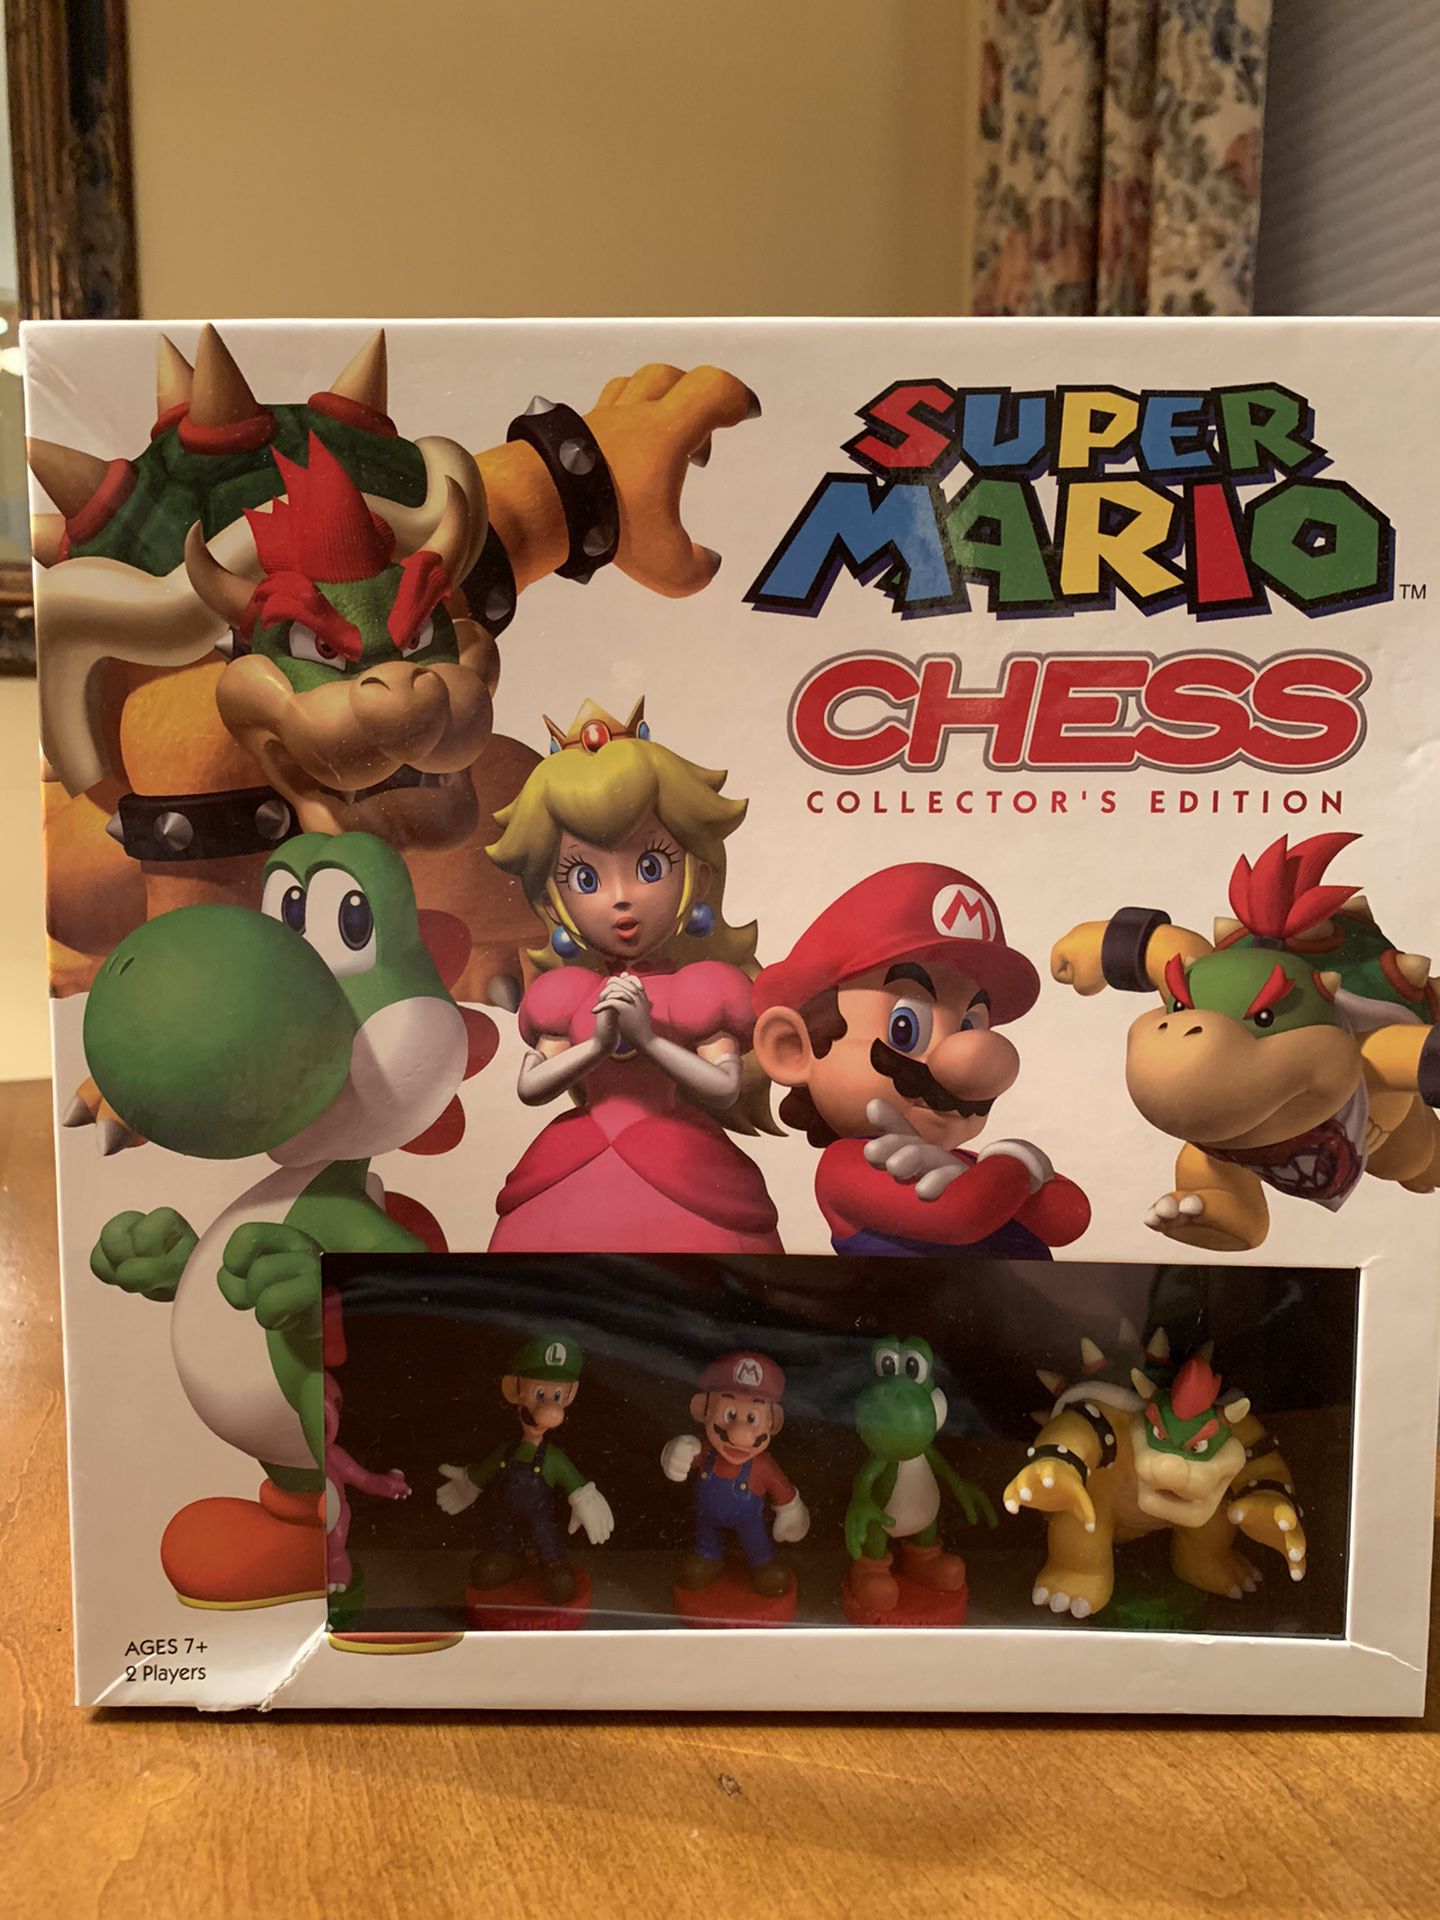 Super Mario Chess game Collector's Edition